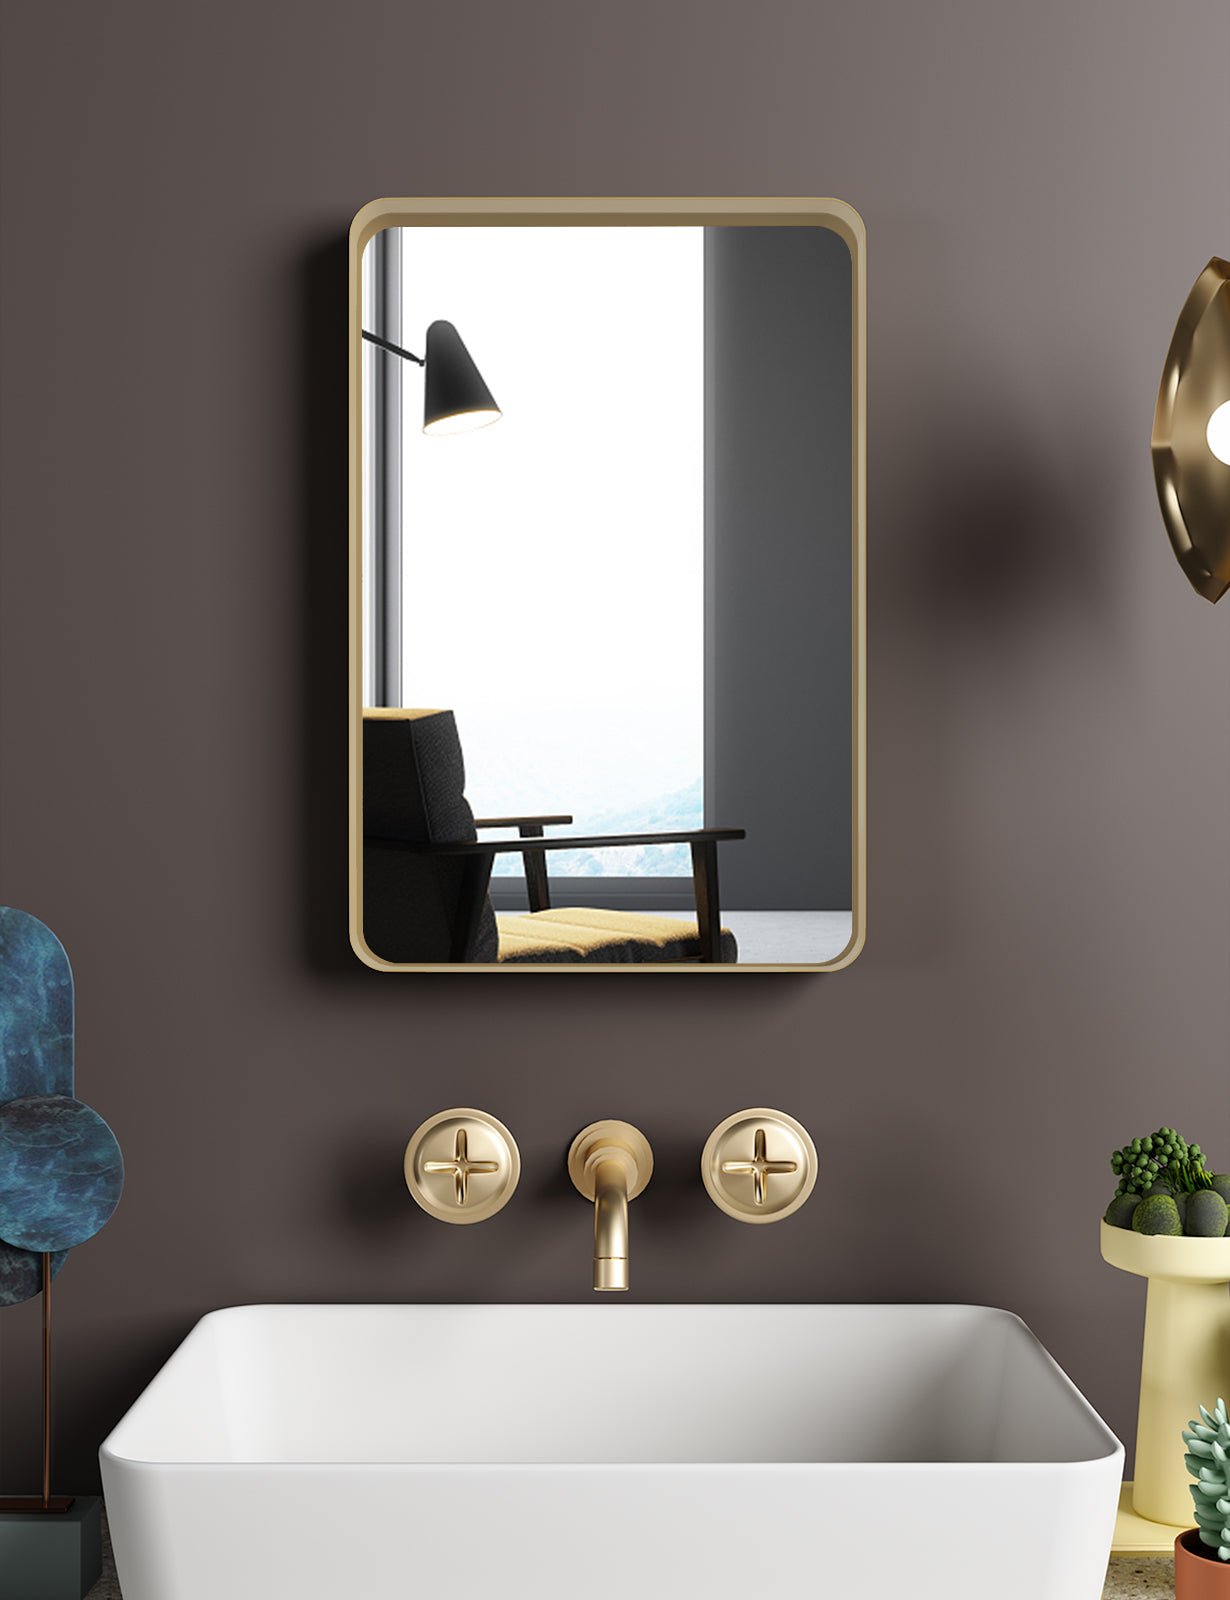 Gold Metal Rectangles Wall Mirror - Demine Essentials